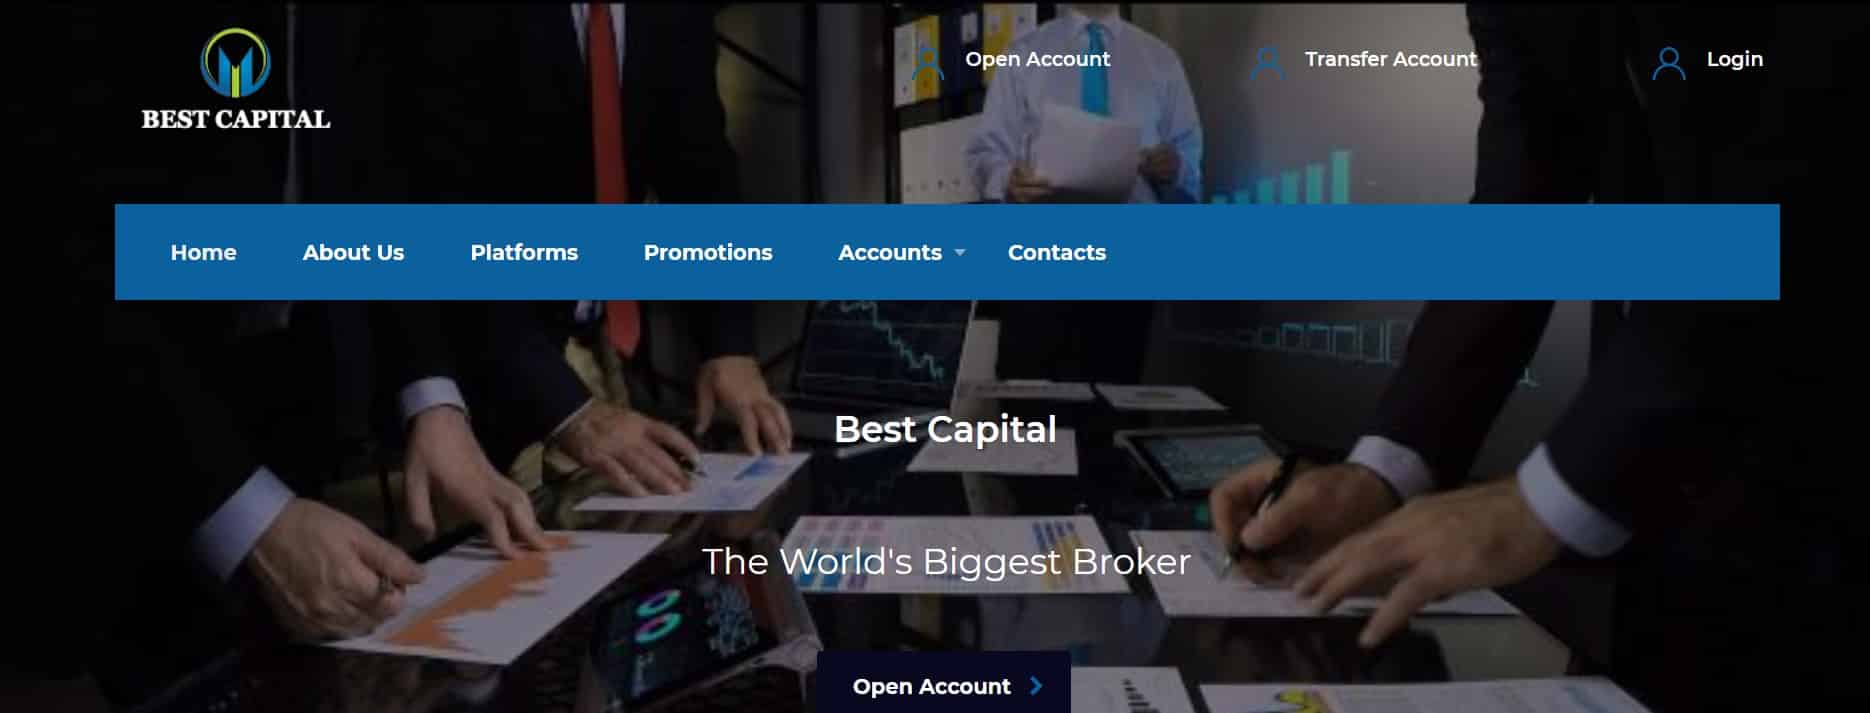 Best Capital website